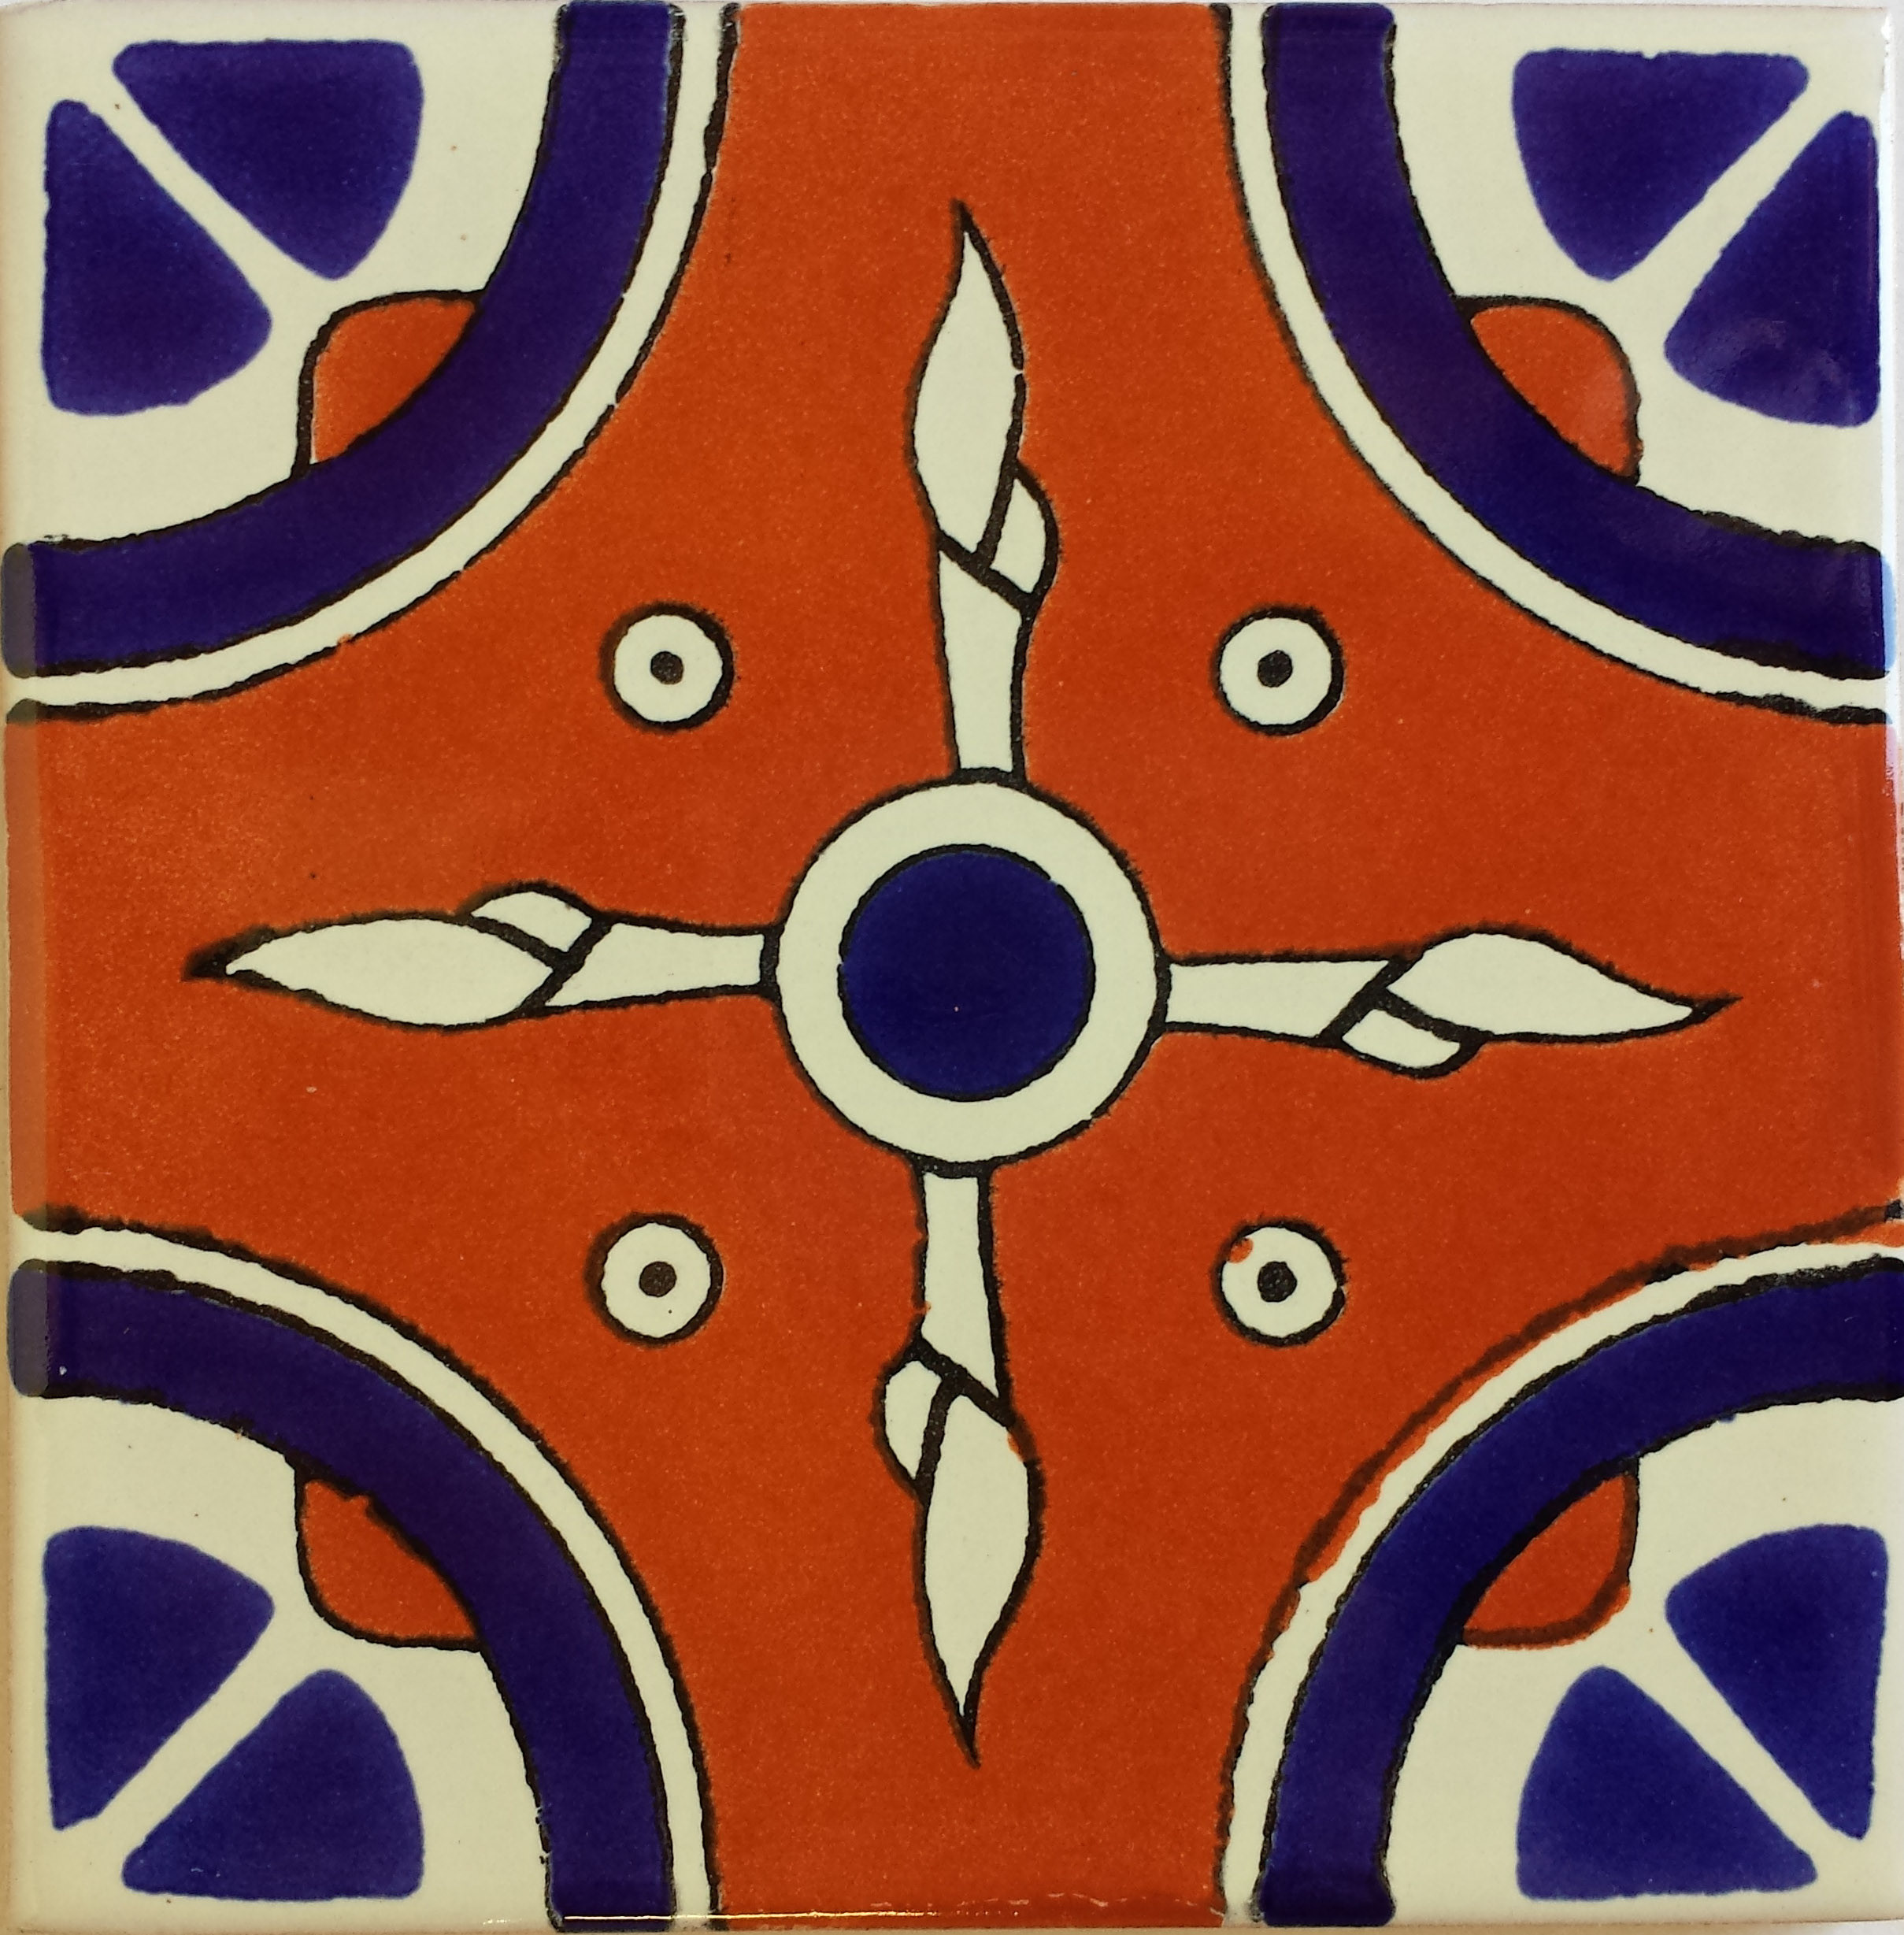 TalaMex Navajo Talavera Mexican Tile